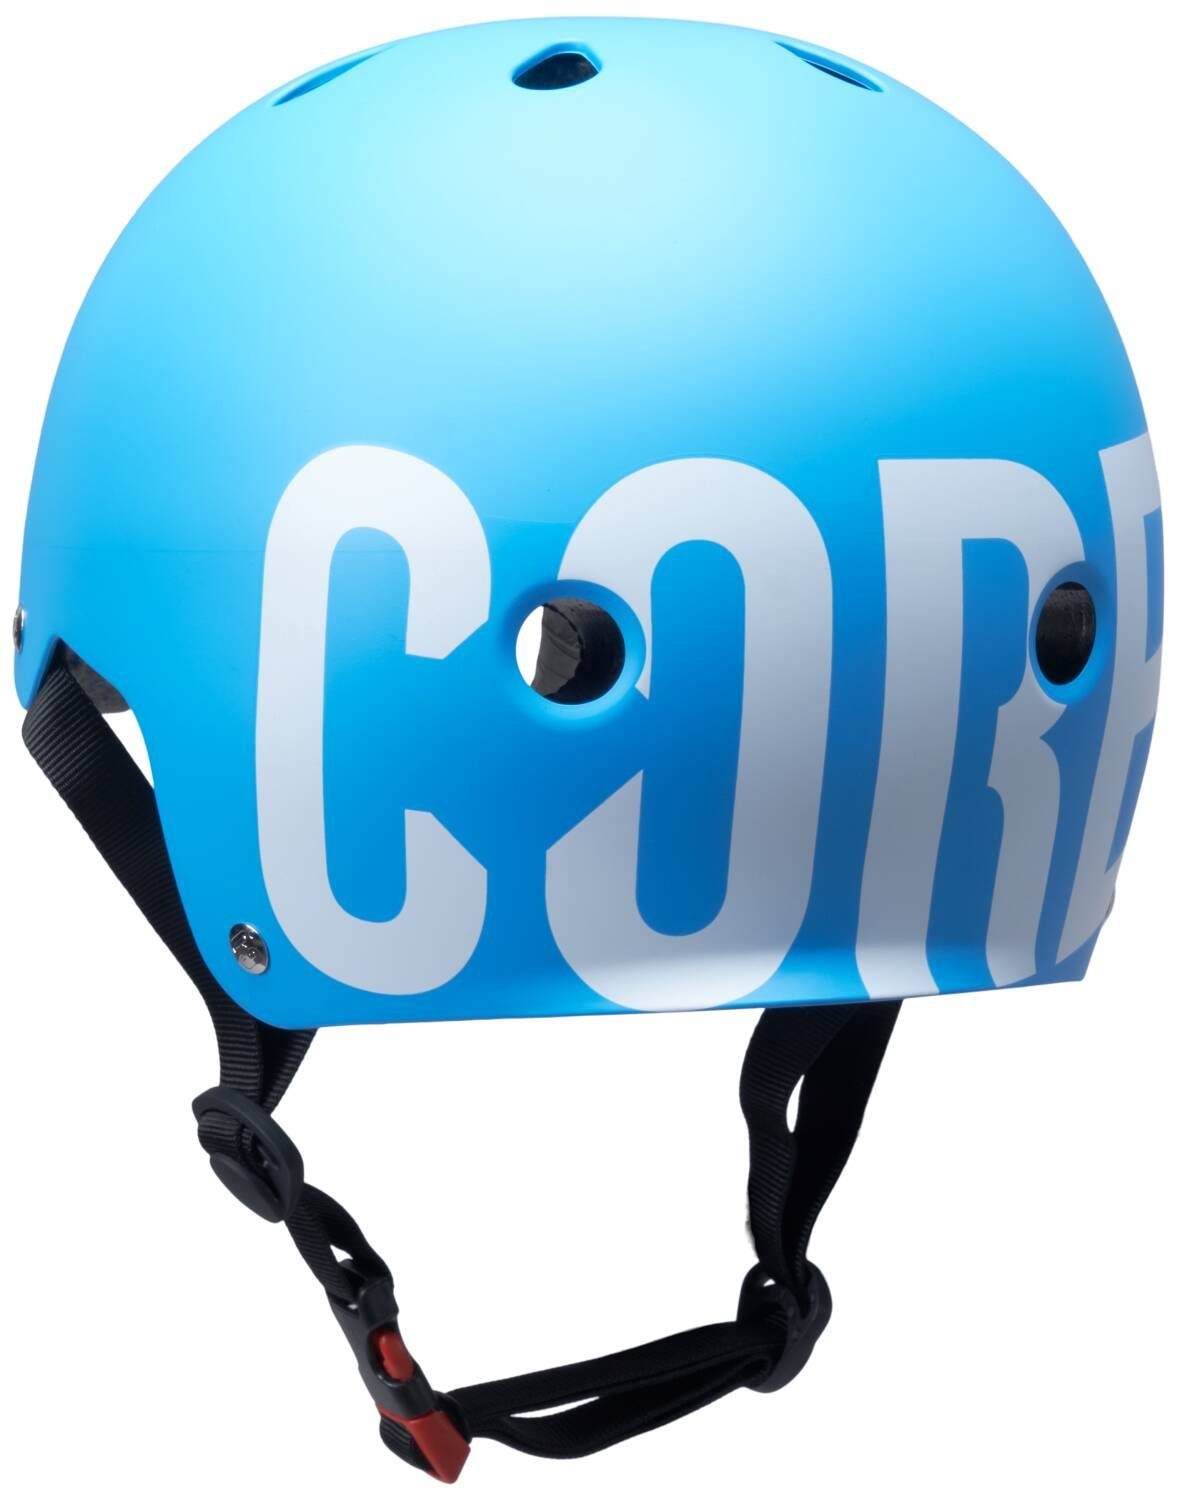 Core Action Sports Skate Stunt-Scooter Weiß Helm Dirt Core Blau/Logo Street Protektoren-Set